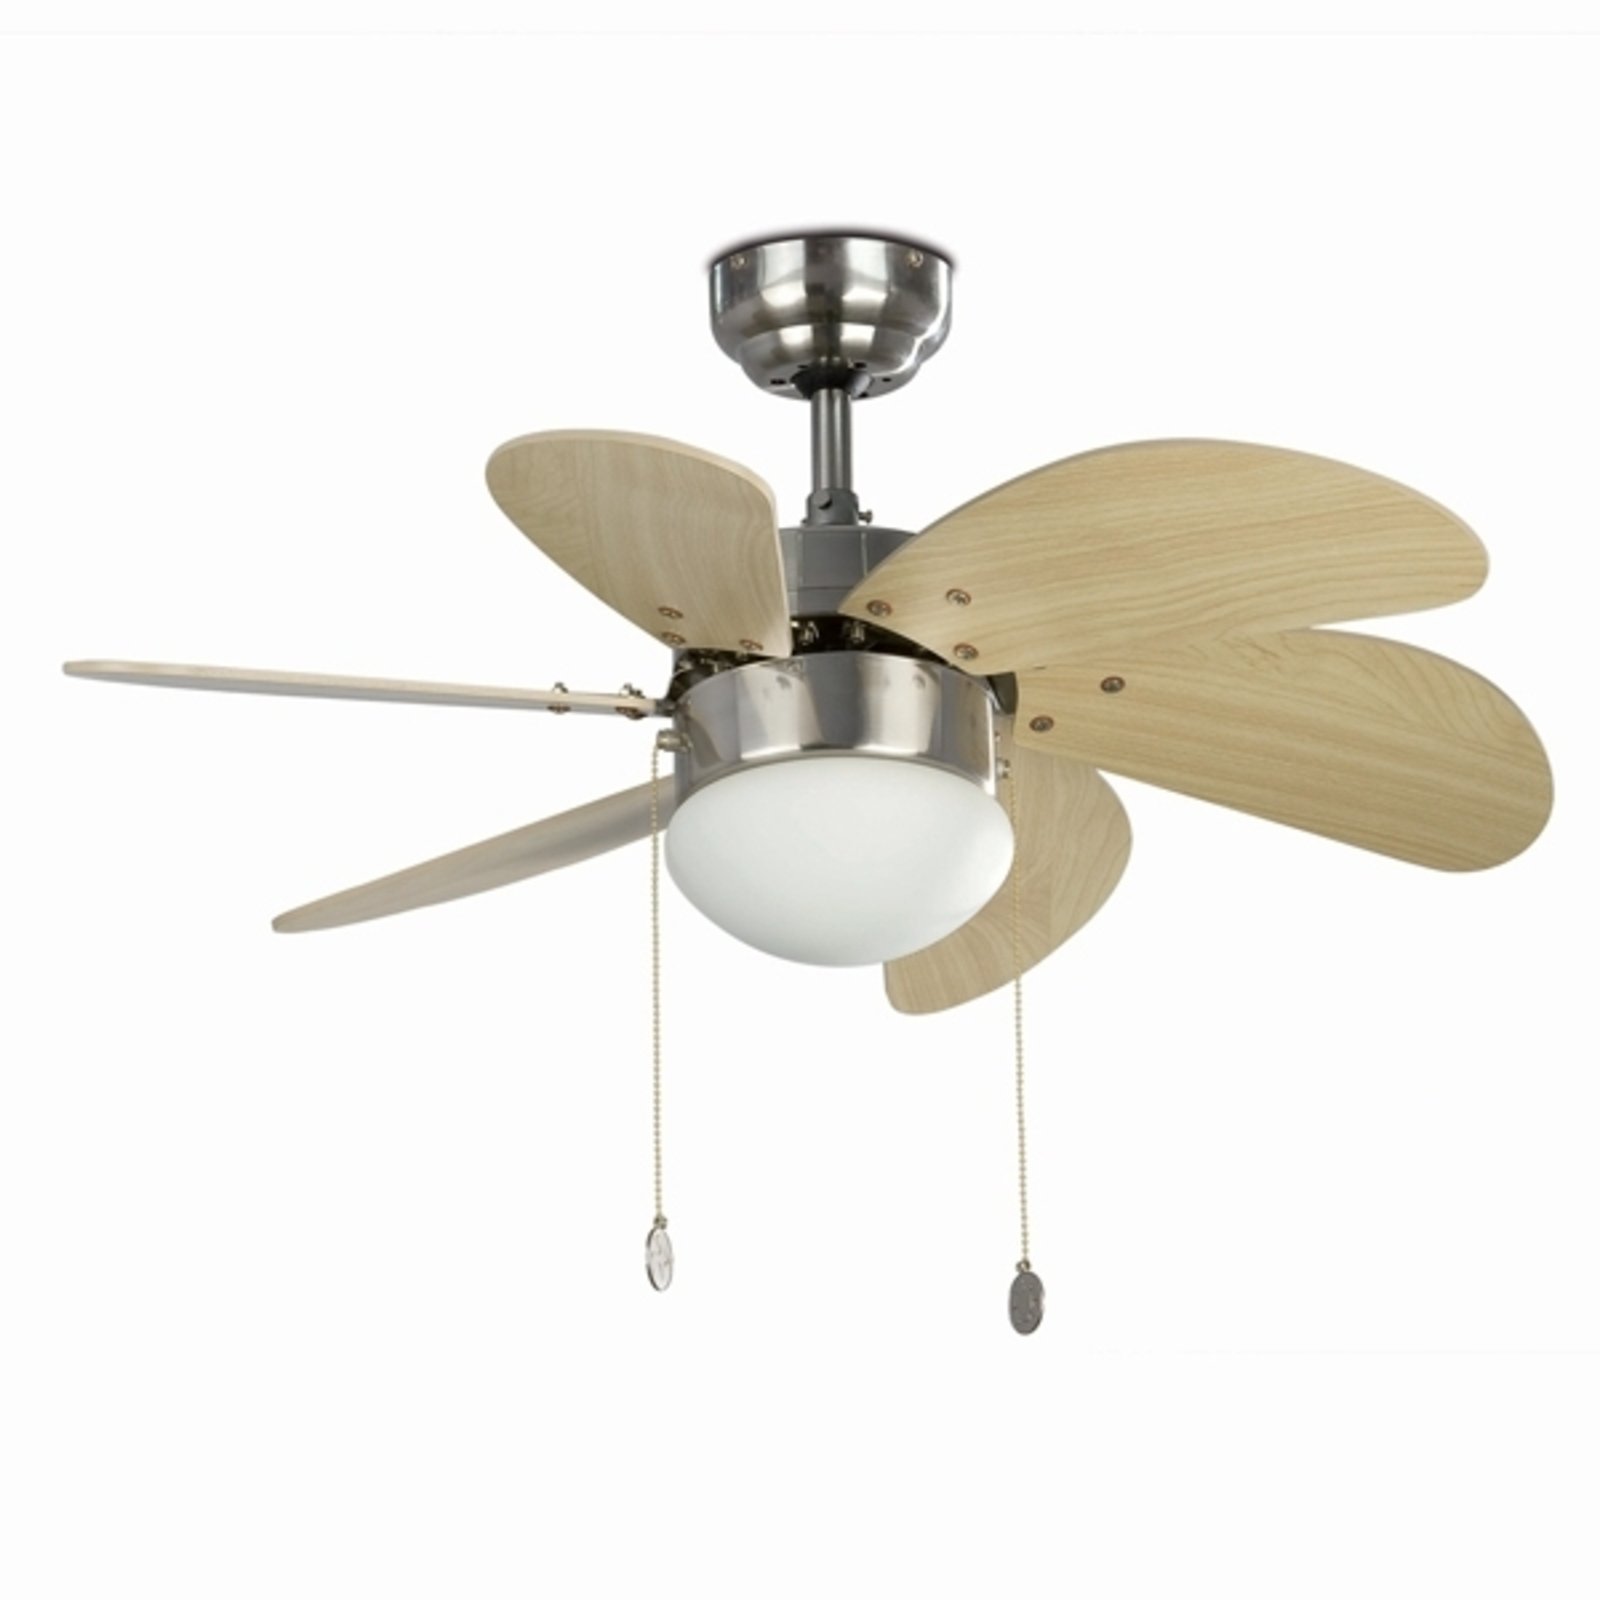 Palao S ceiling fan with a light, matt nickel